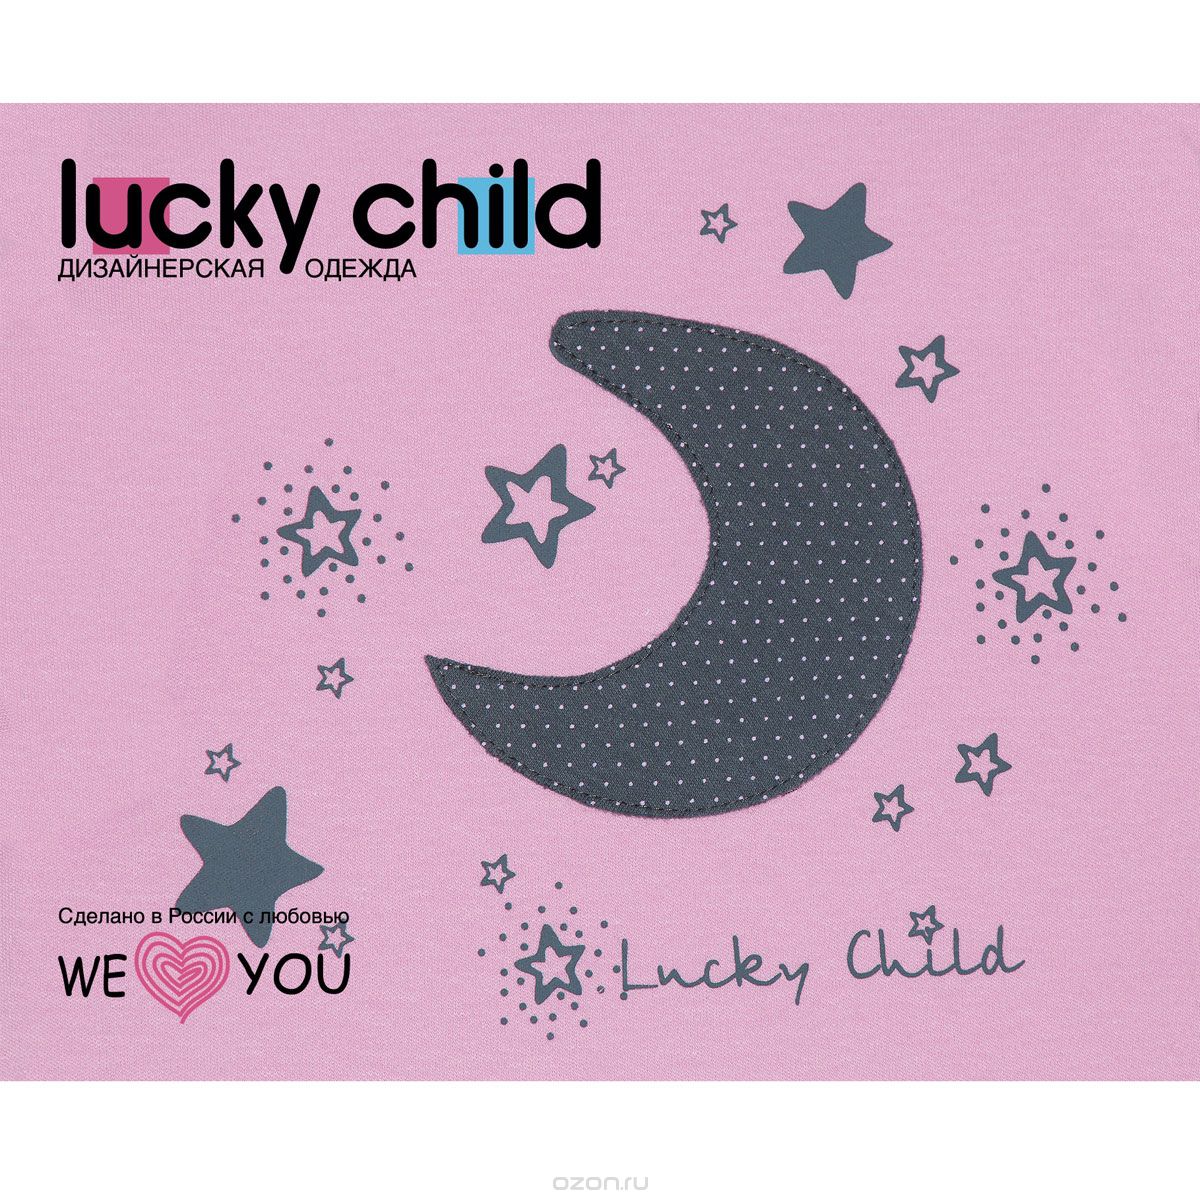    Lucky Child: , , : -, . 12-411.  122/128